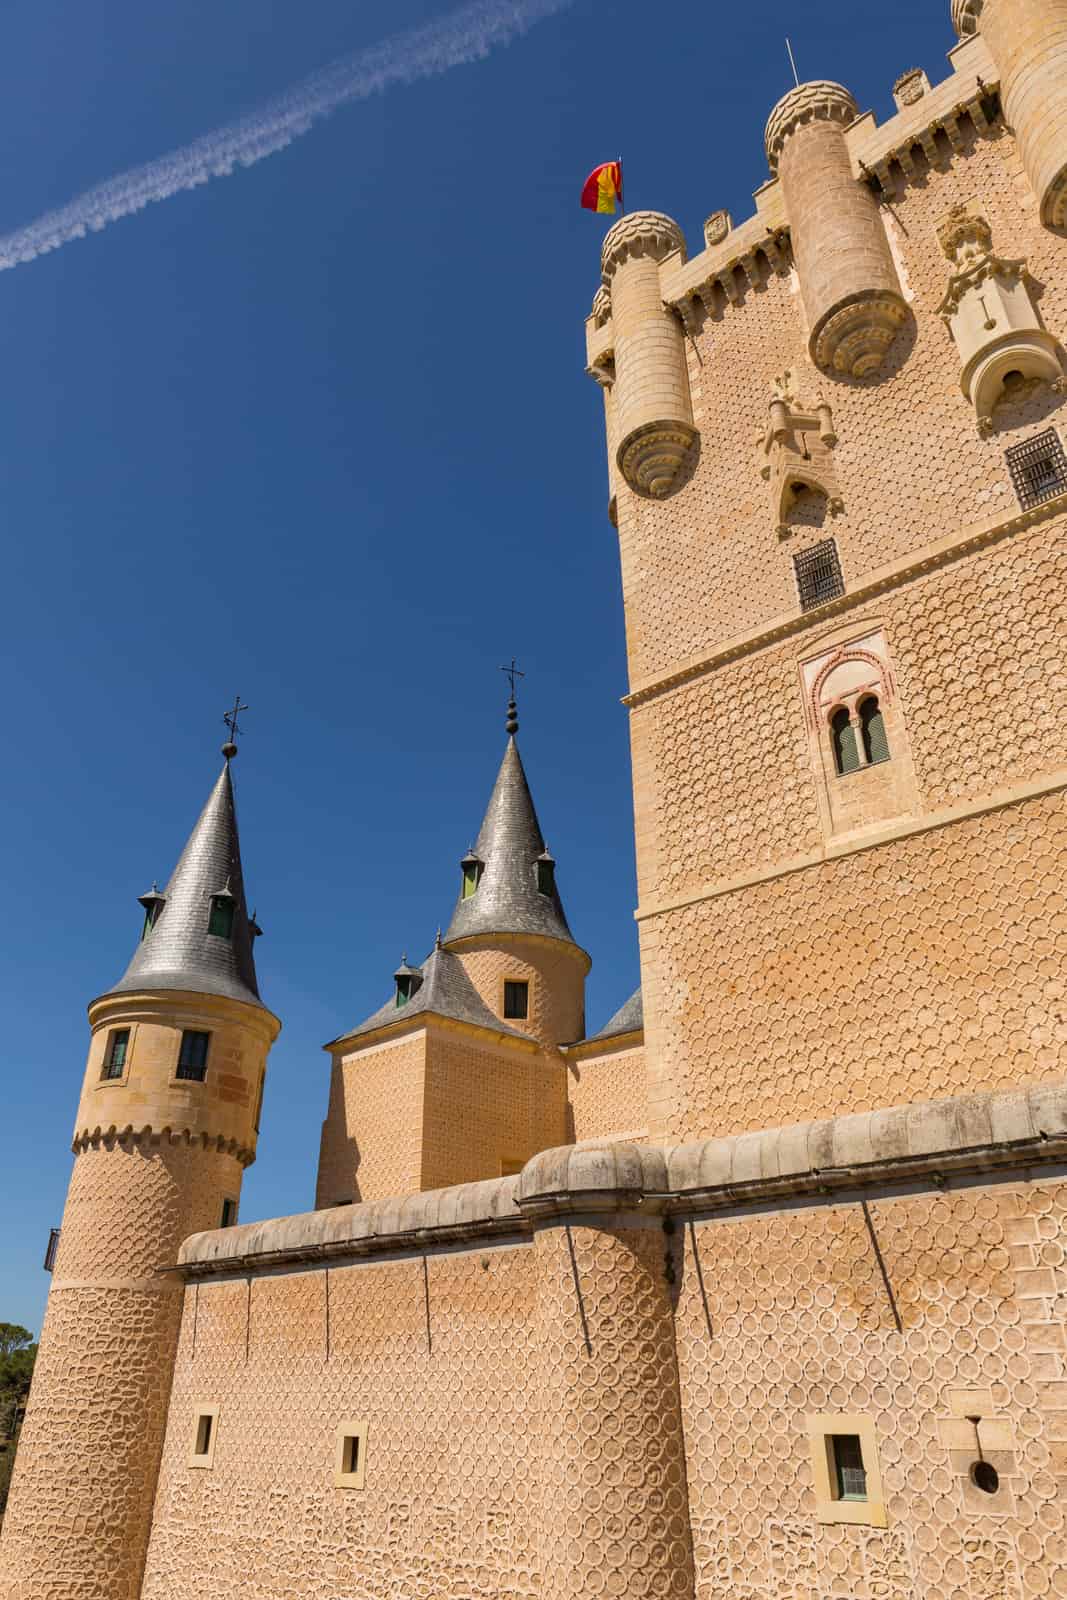 Segovia, Spain: The famous Alcazar castle of Segovia